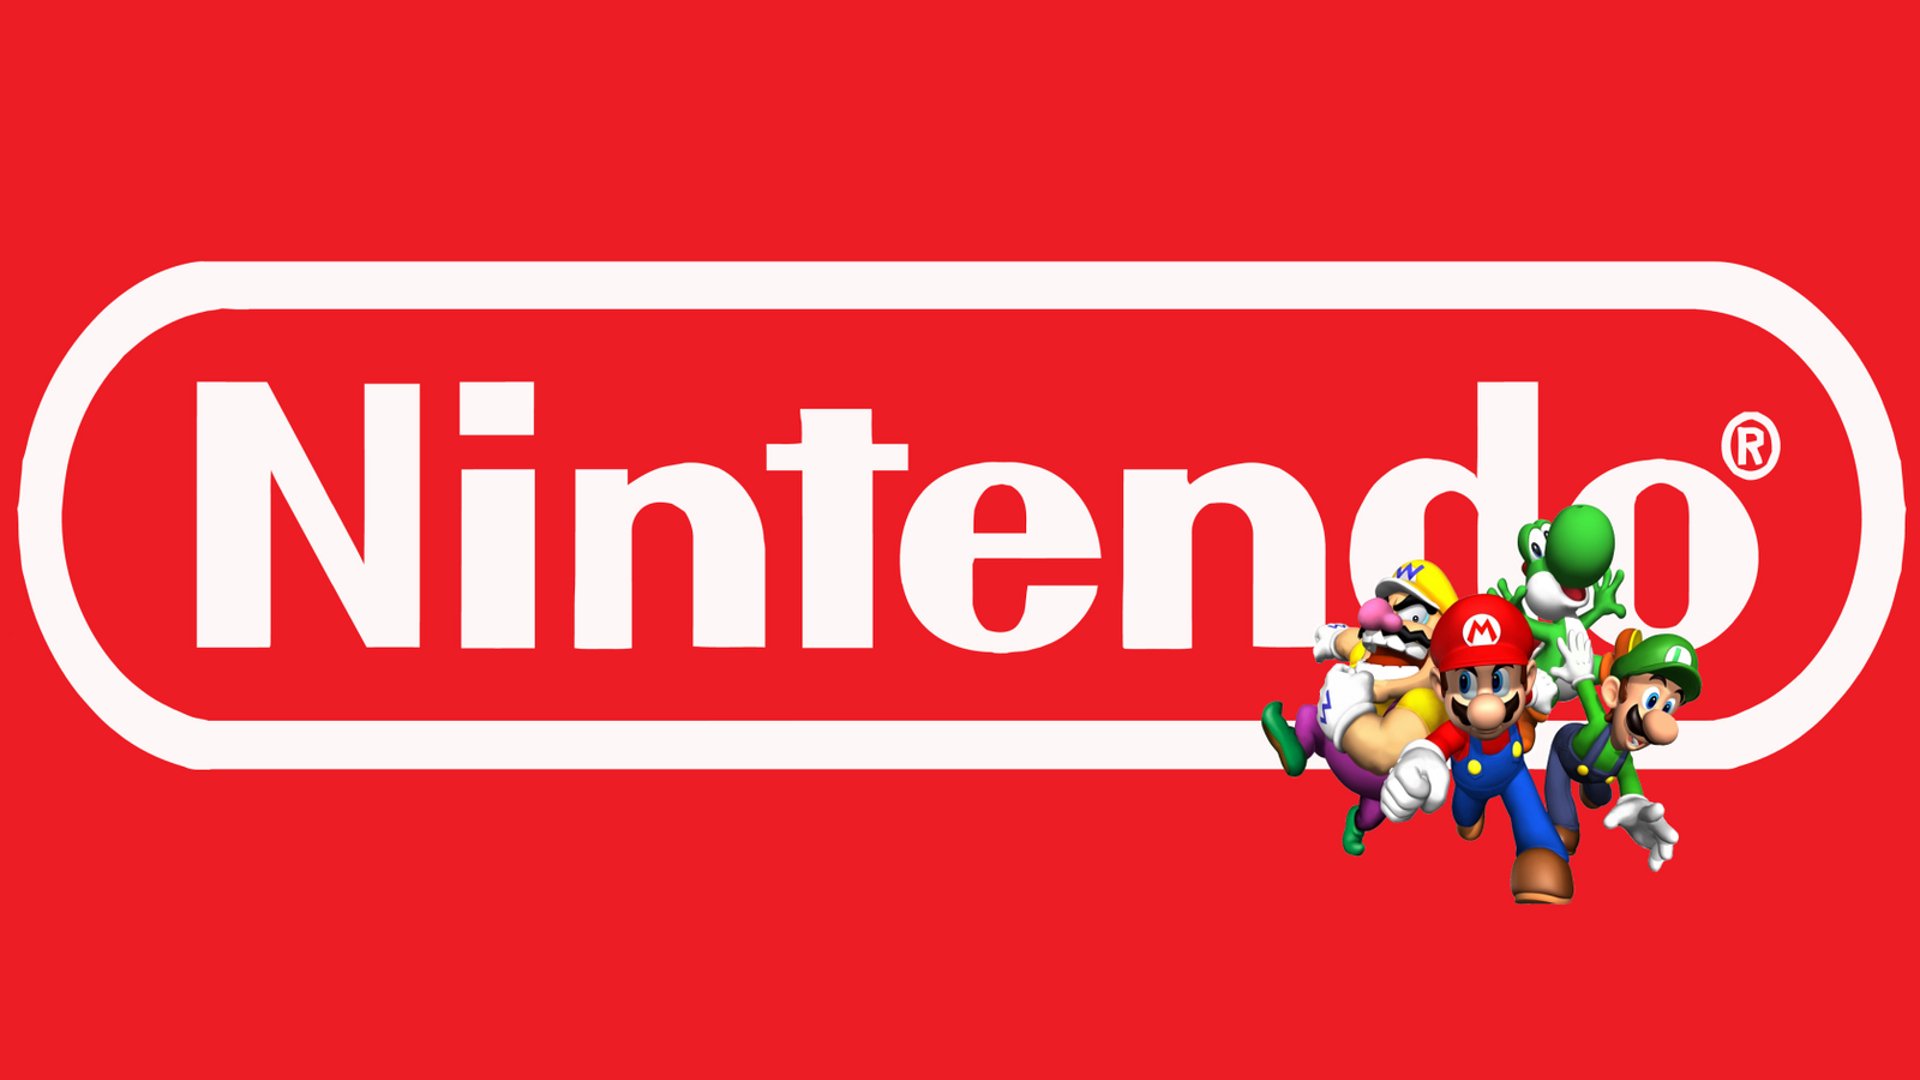 Https nintendo. Нинтендокор. Ринсэндо. Нинтендо компания. Nintendo лого.